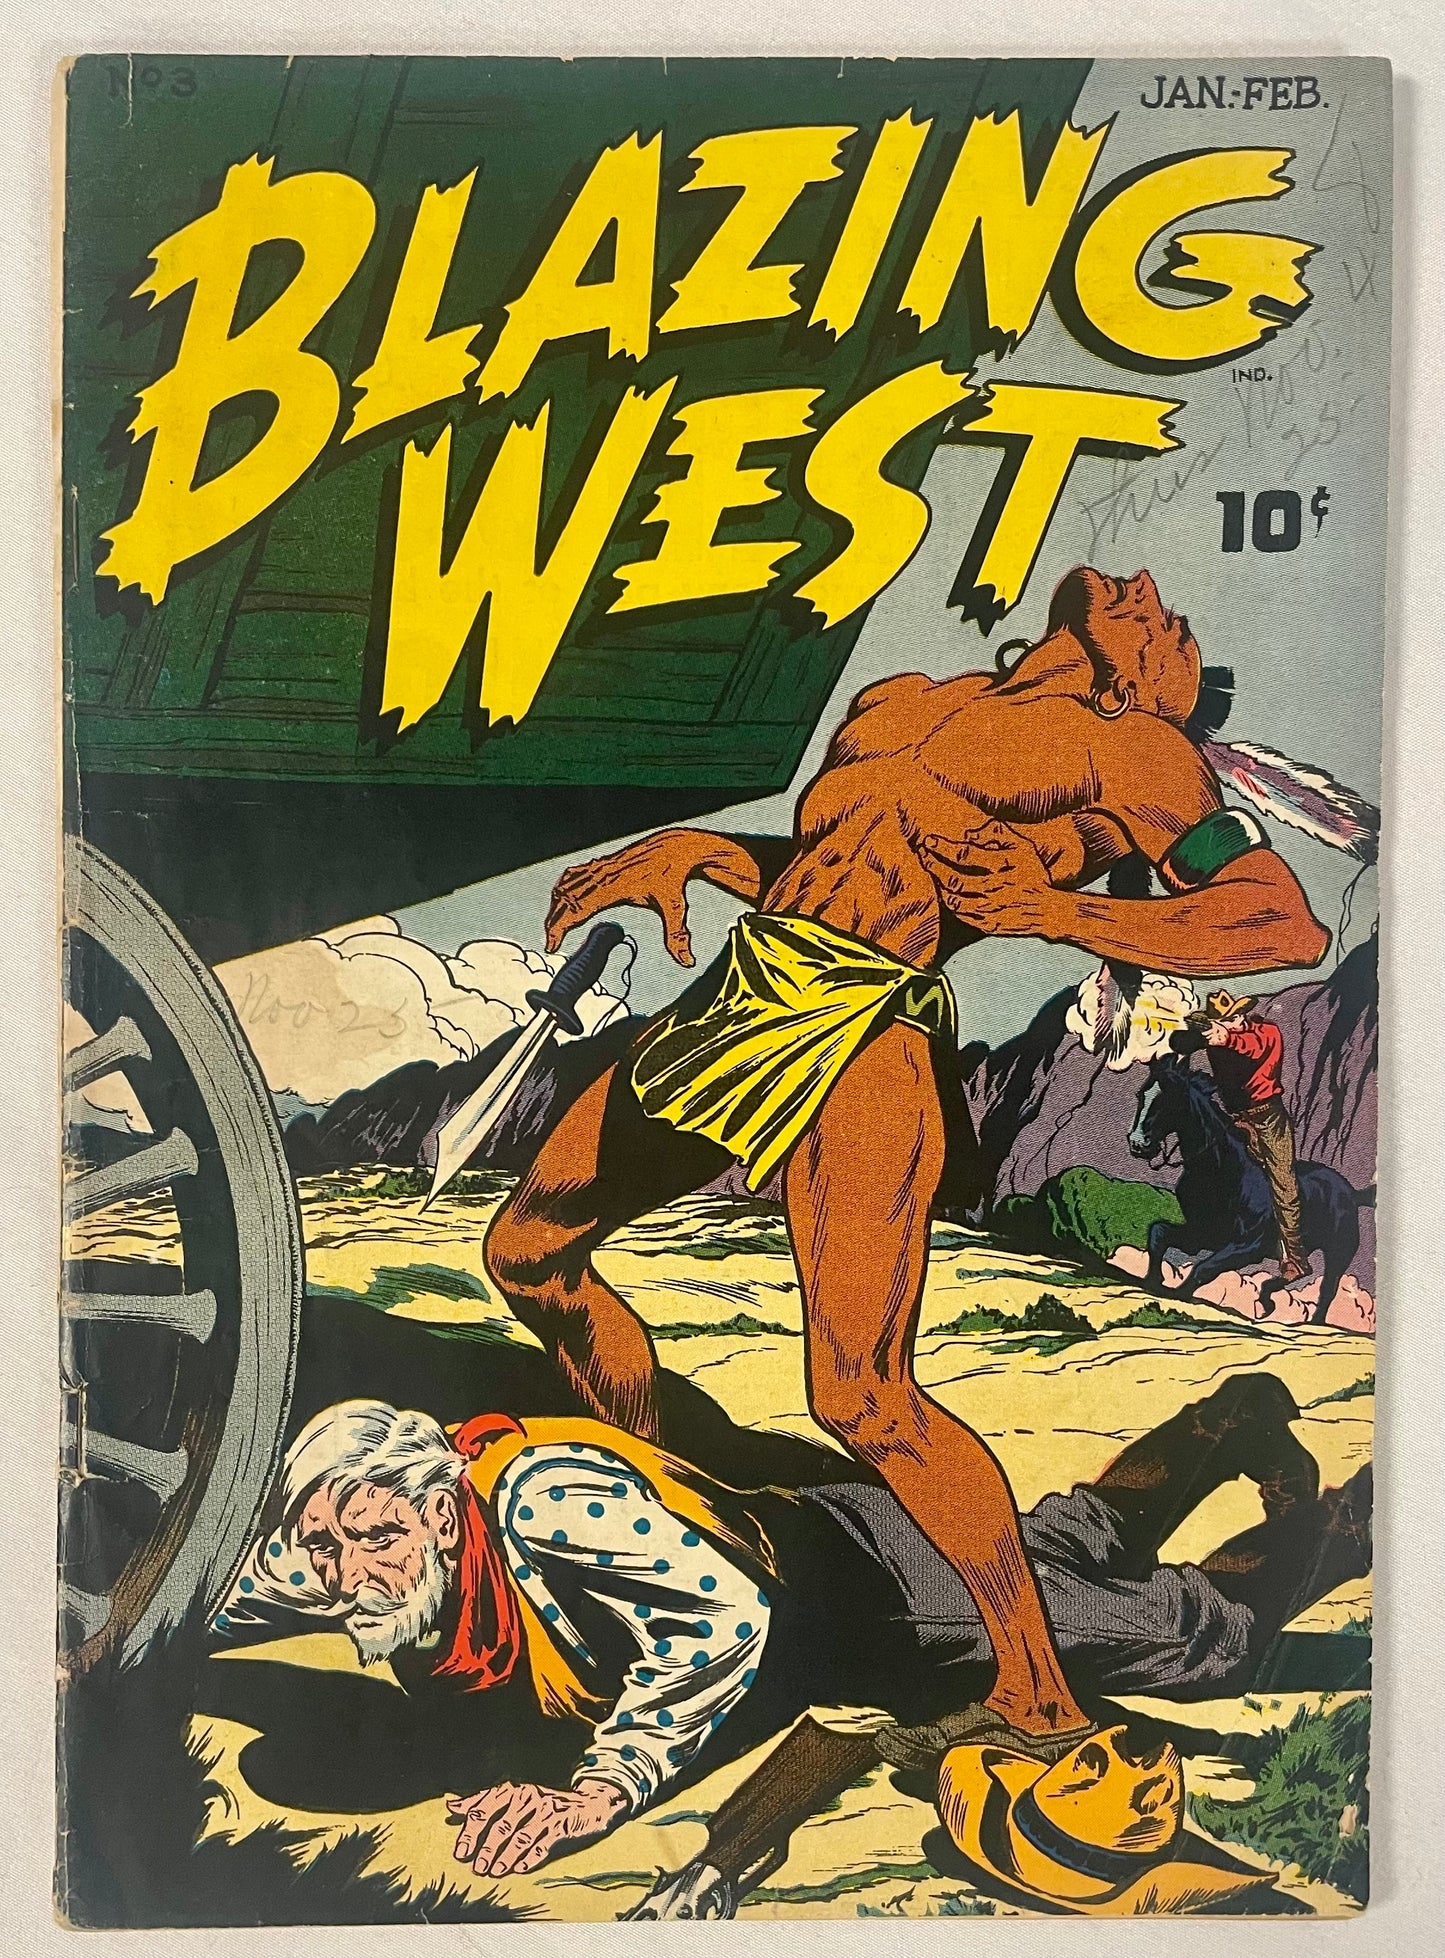 American Comics Group Blazing West No.3